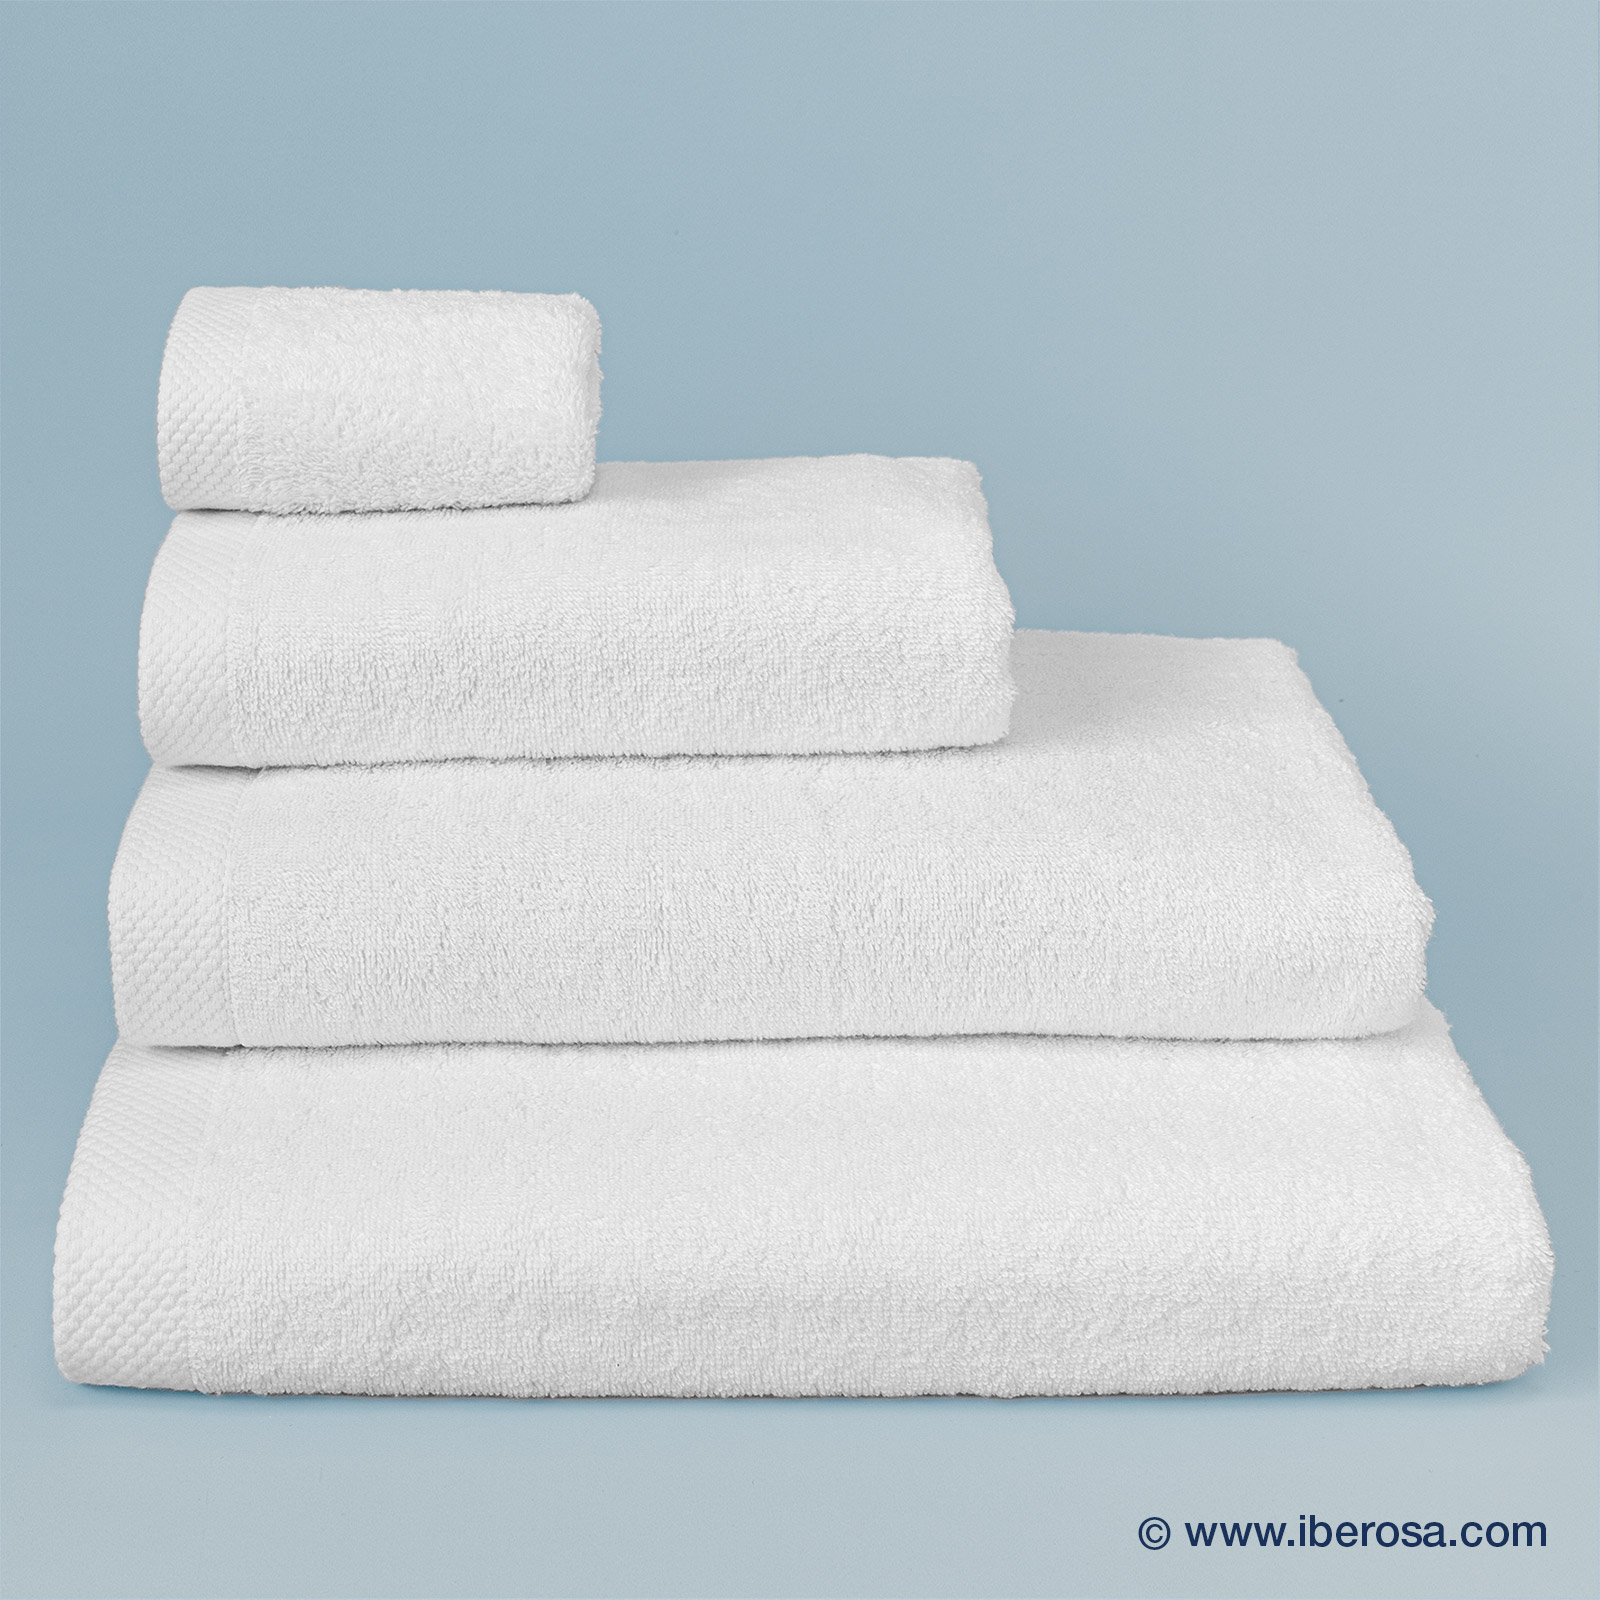 iberosa-toallas-lisa-520-gramos